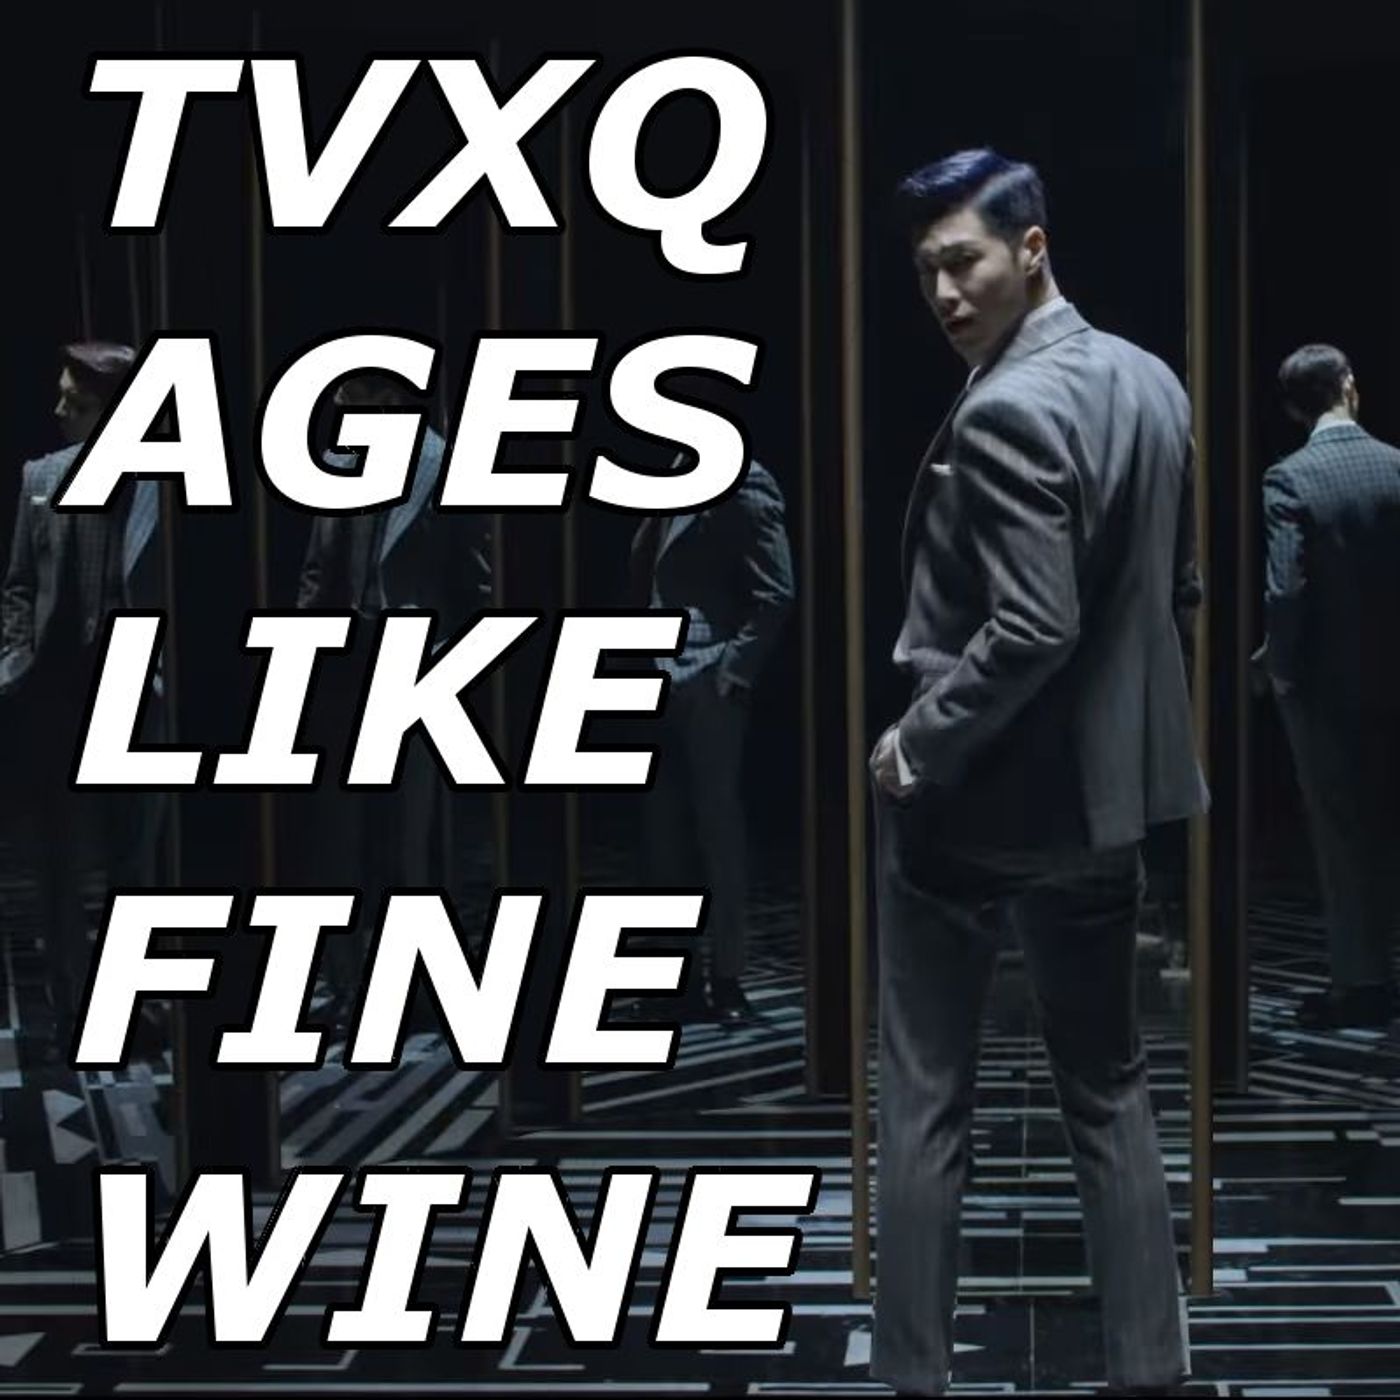 TVXQ Ages Like Fine Wine